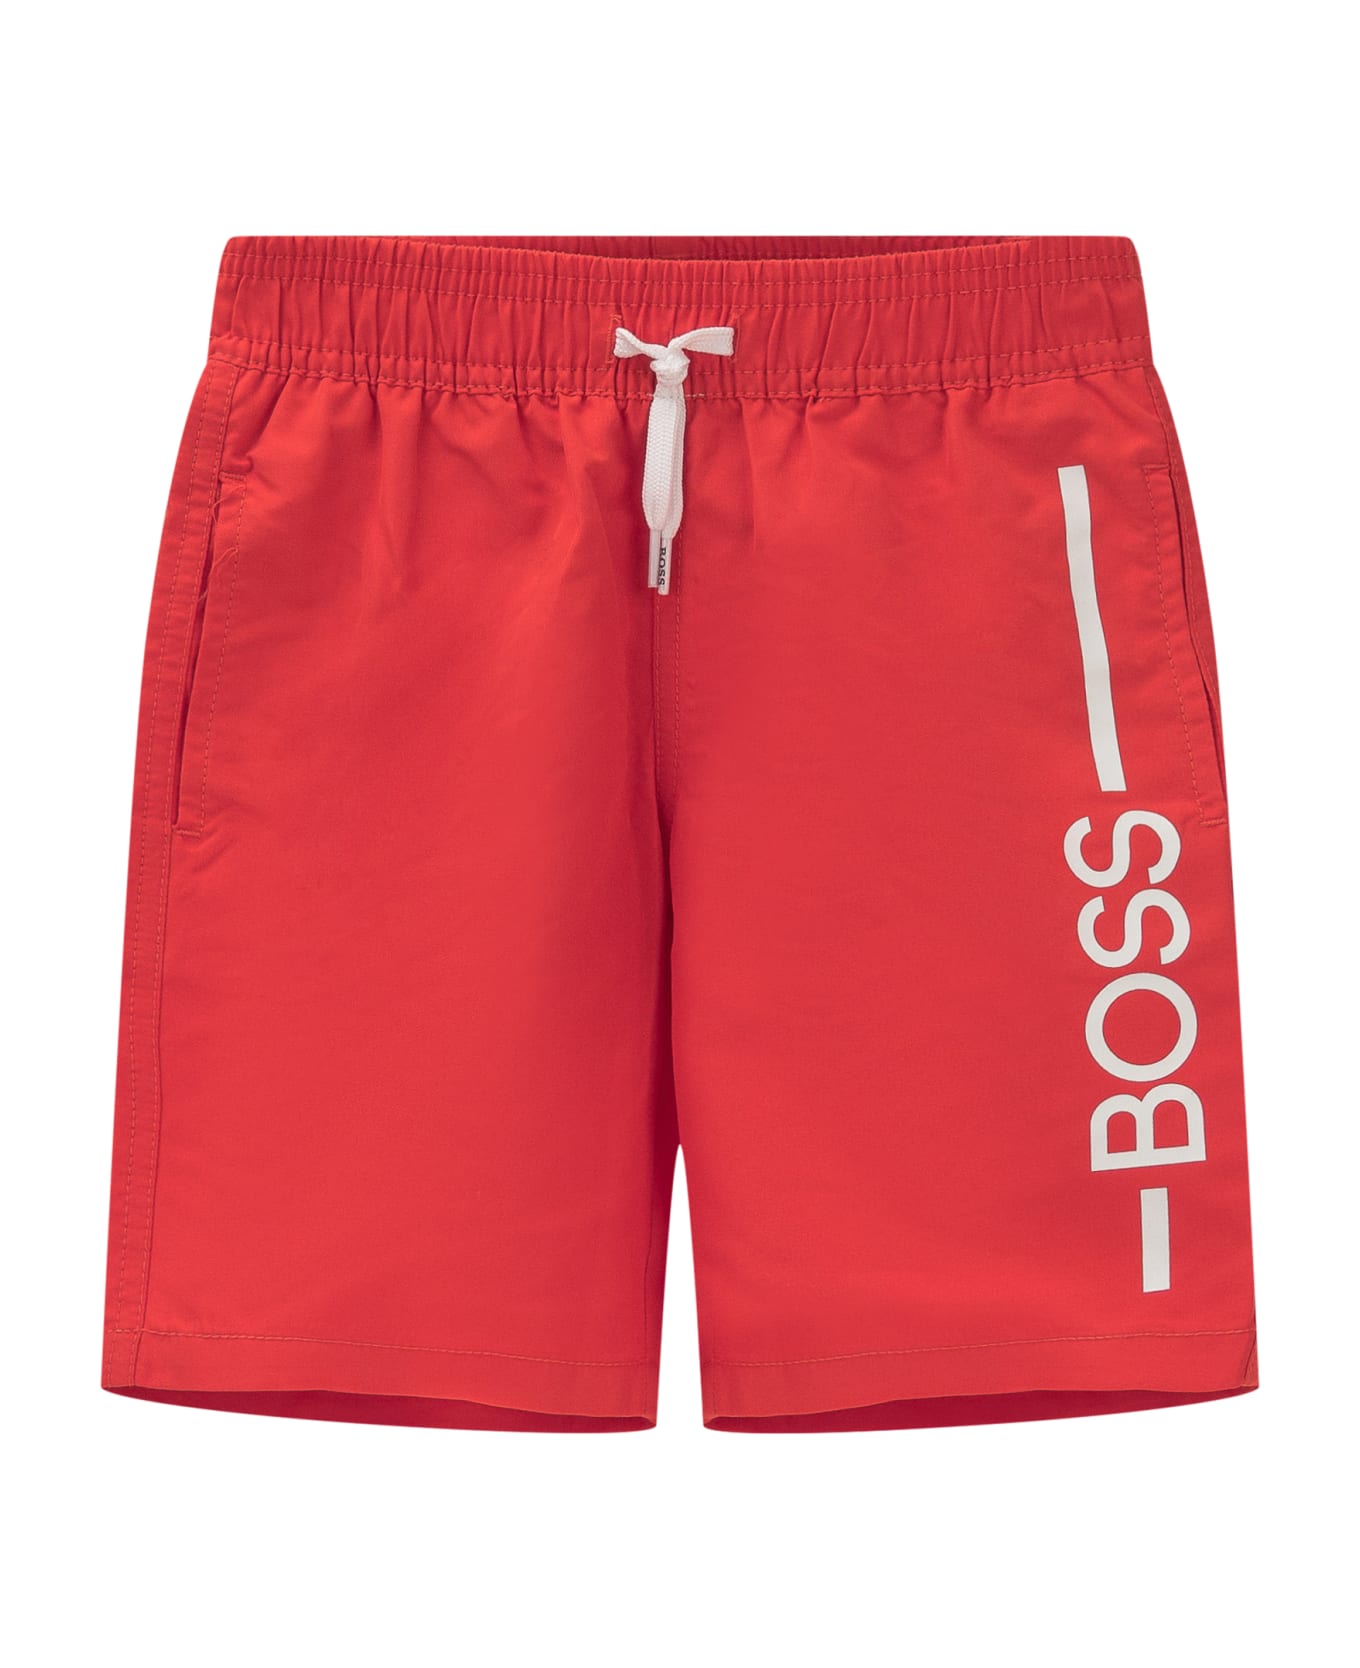 Hugo Boss Swim Shorts - 992 水着